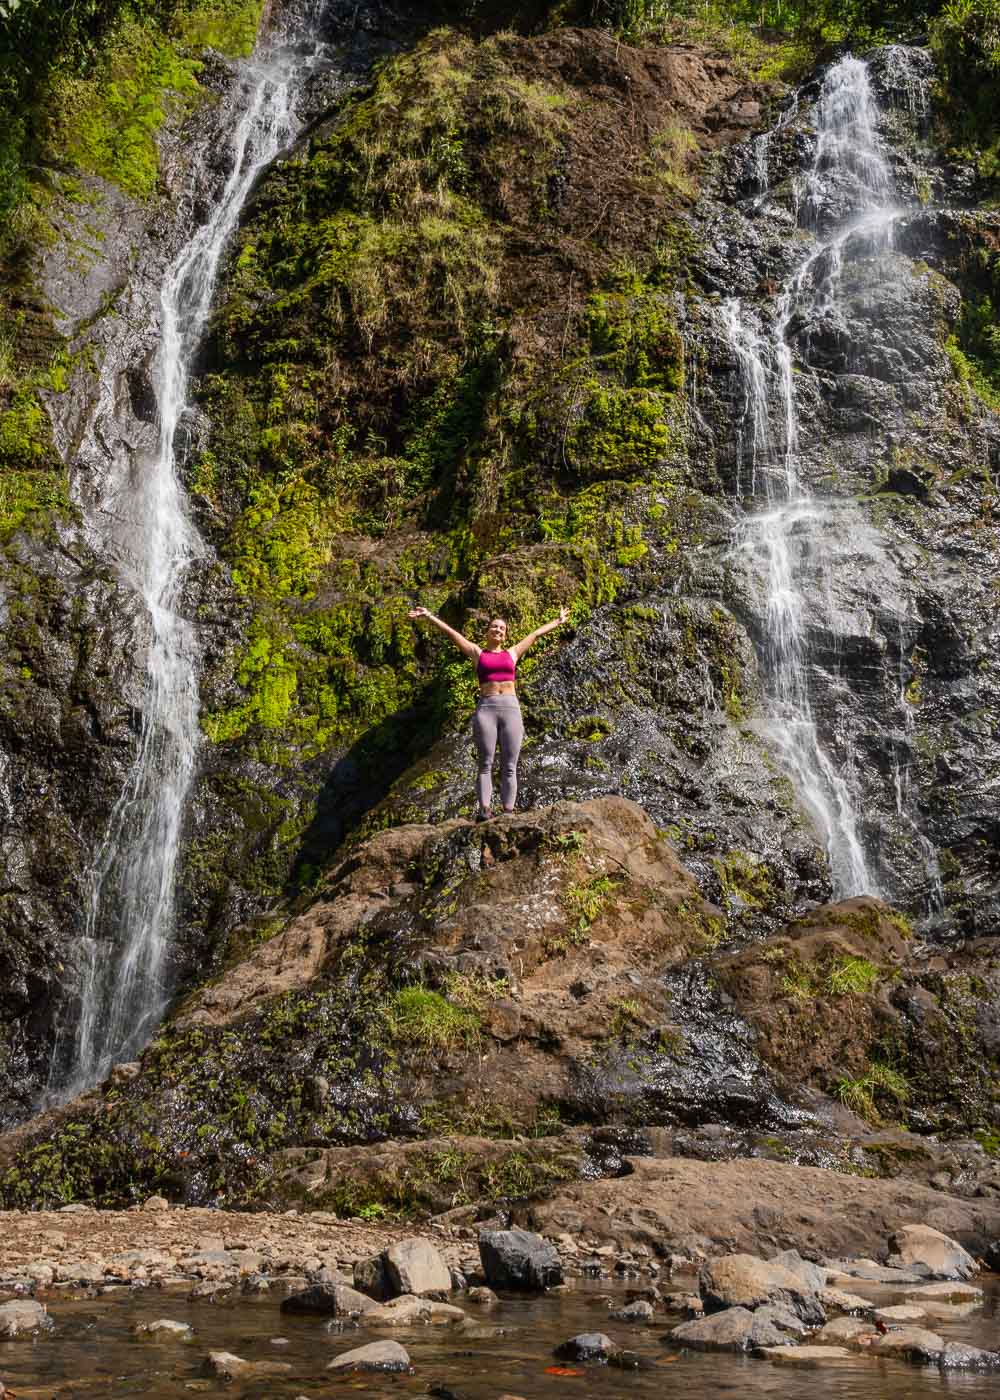 Sara happy-posing on a rock in the middle of Cascada la Escalera's two cascades.